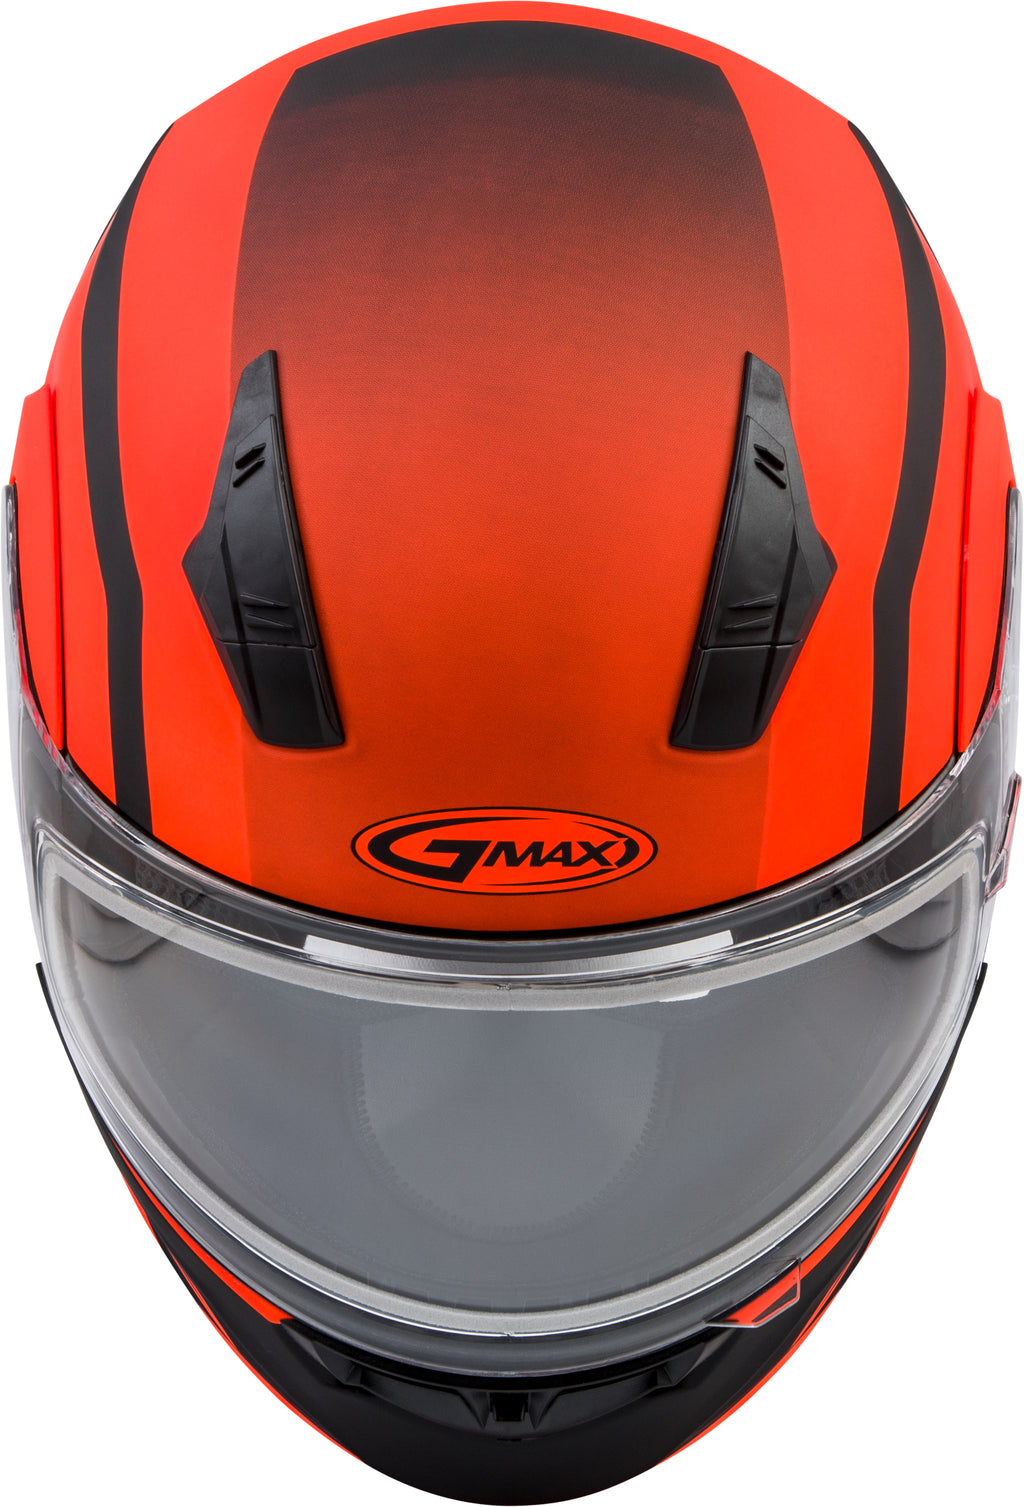 Md 04s Modular Docket Snow Helmet Matte Neon Org/Blk Lg